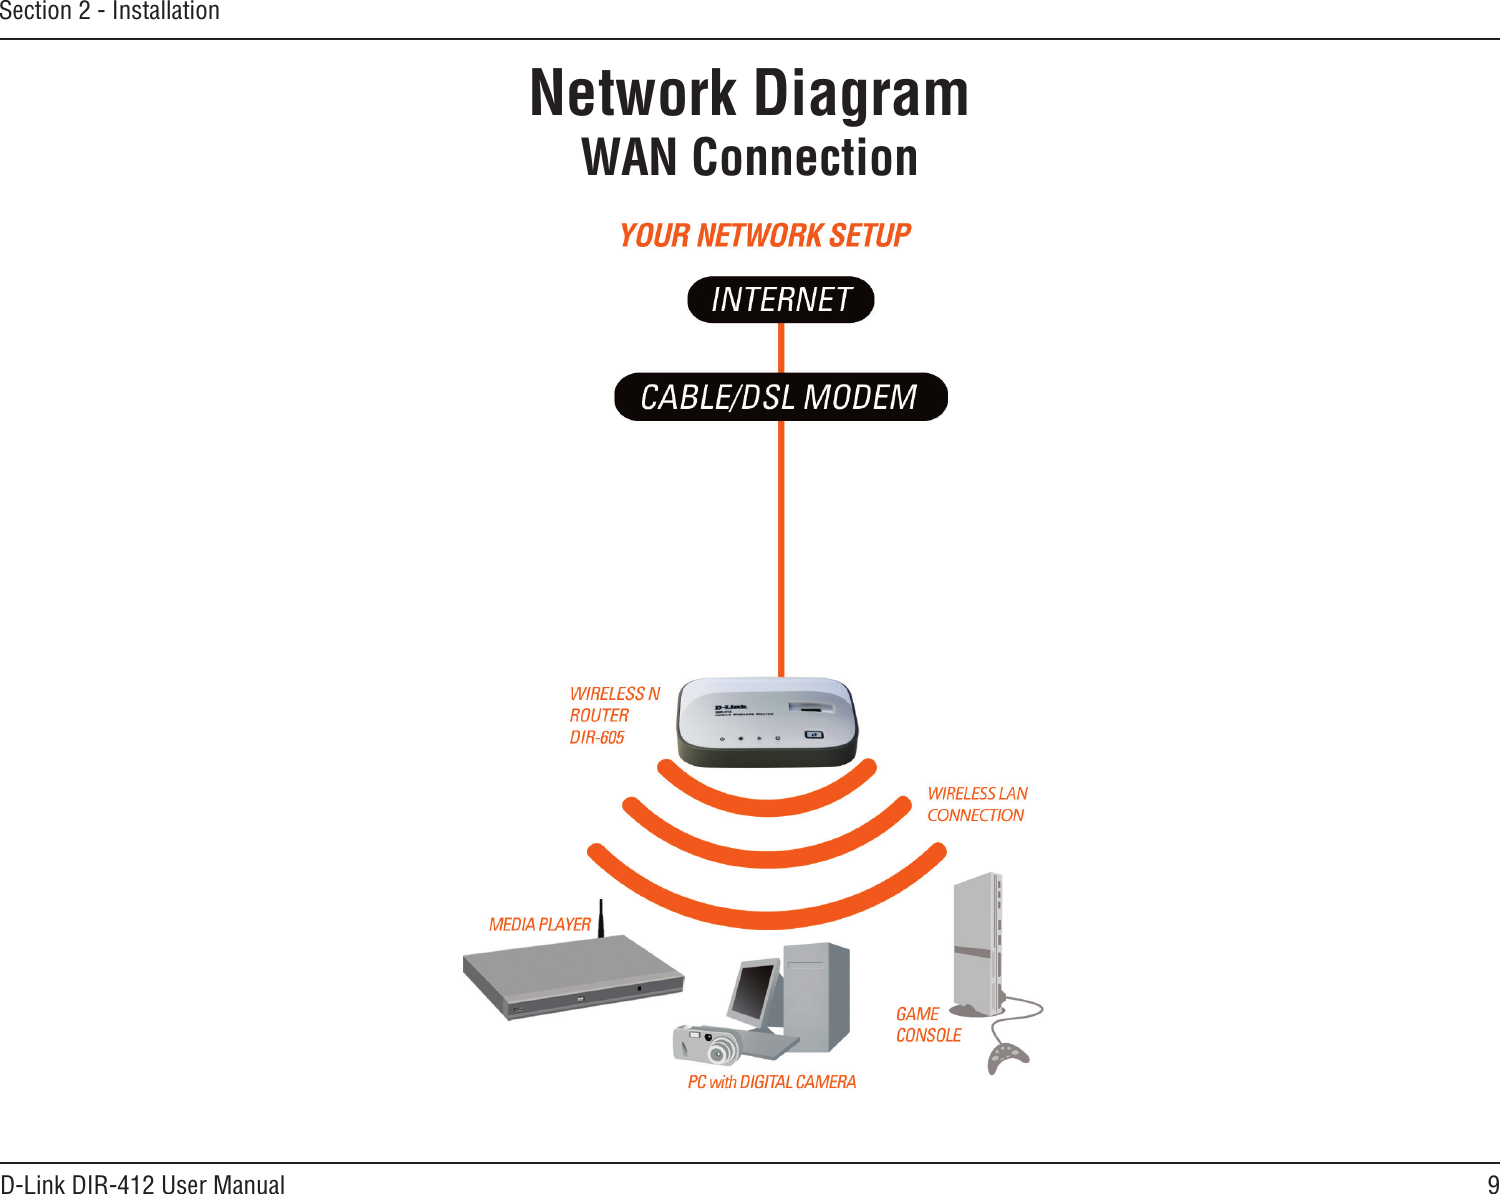 9D-Link DIR-412 User ManualSection 2 - InstallationNetwork Diagram WAN Connection